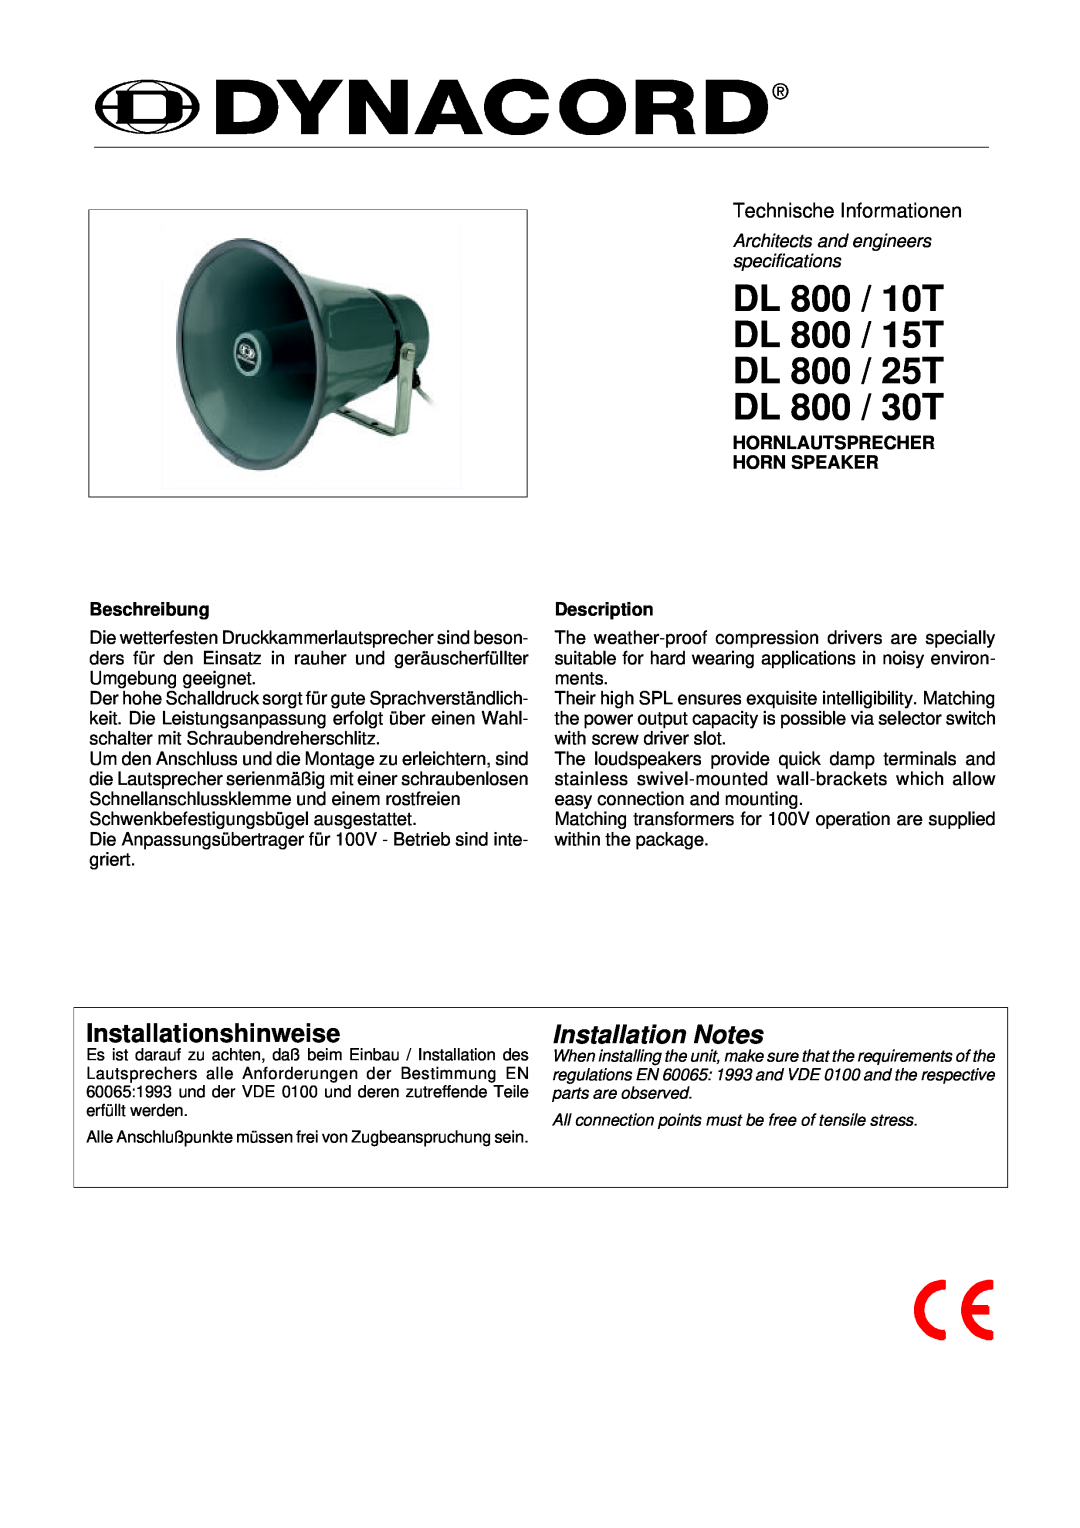 Dynacord DL 800 / 10T, DL 800 / 15T specifications Beschreibung, HORNLAUTSPRECHER HORN SPEAKER Description, DL 800 / 30T 